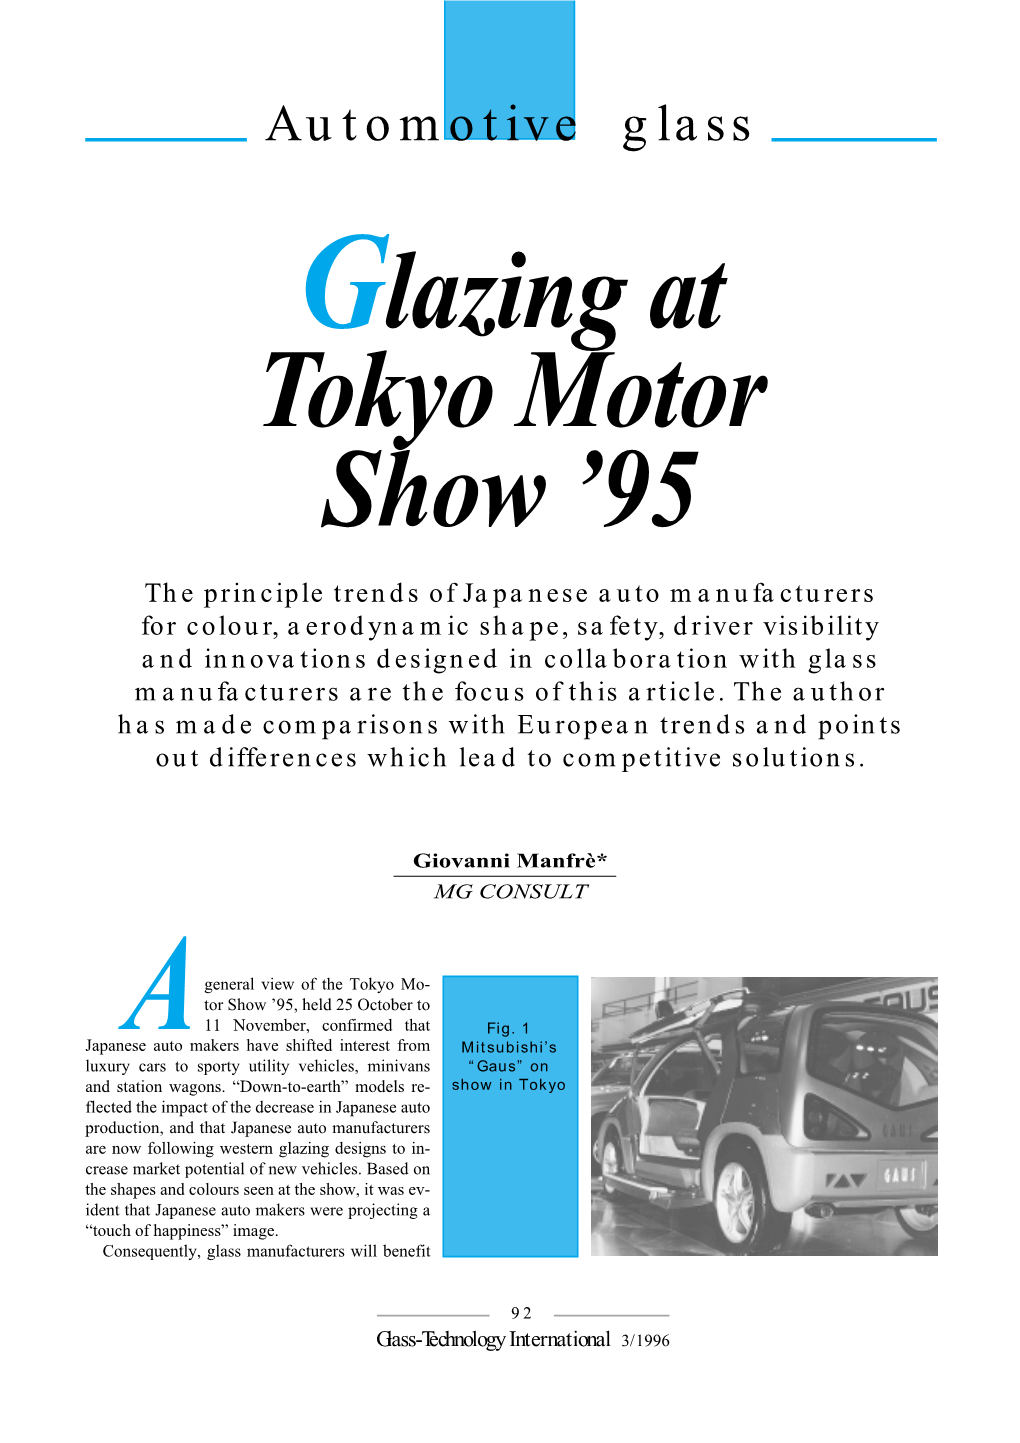 Glazing at Tokyo Motor Show ’95